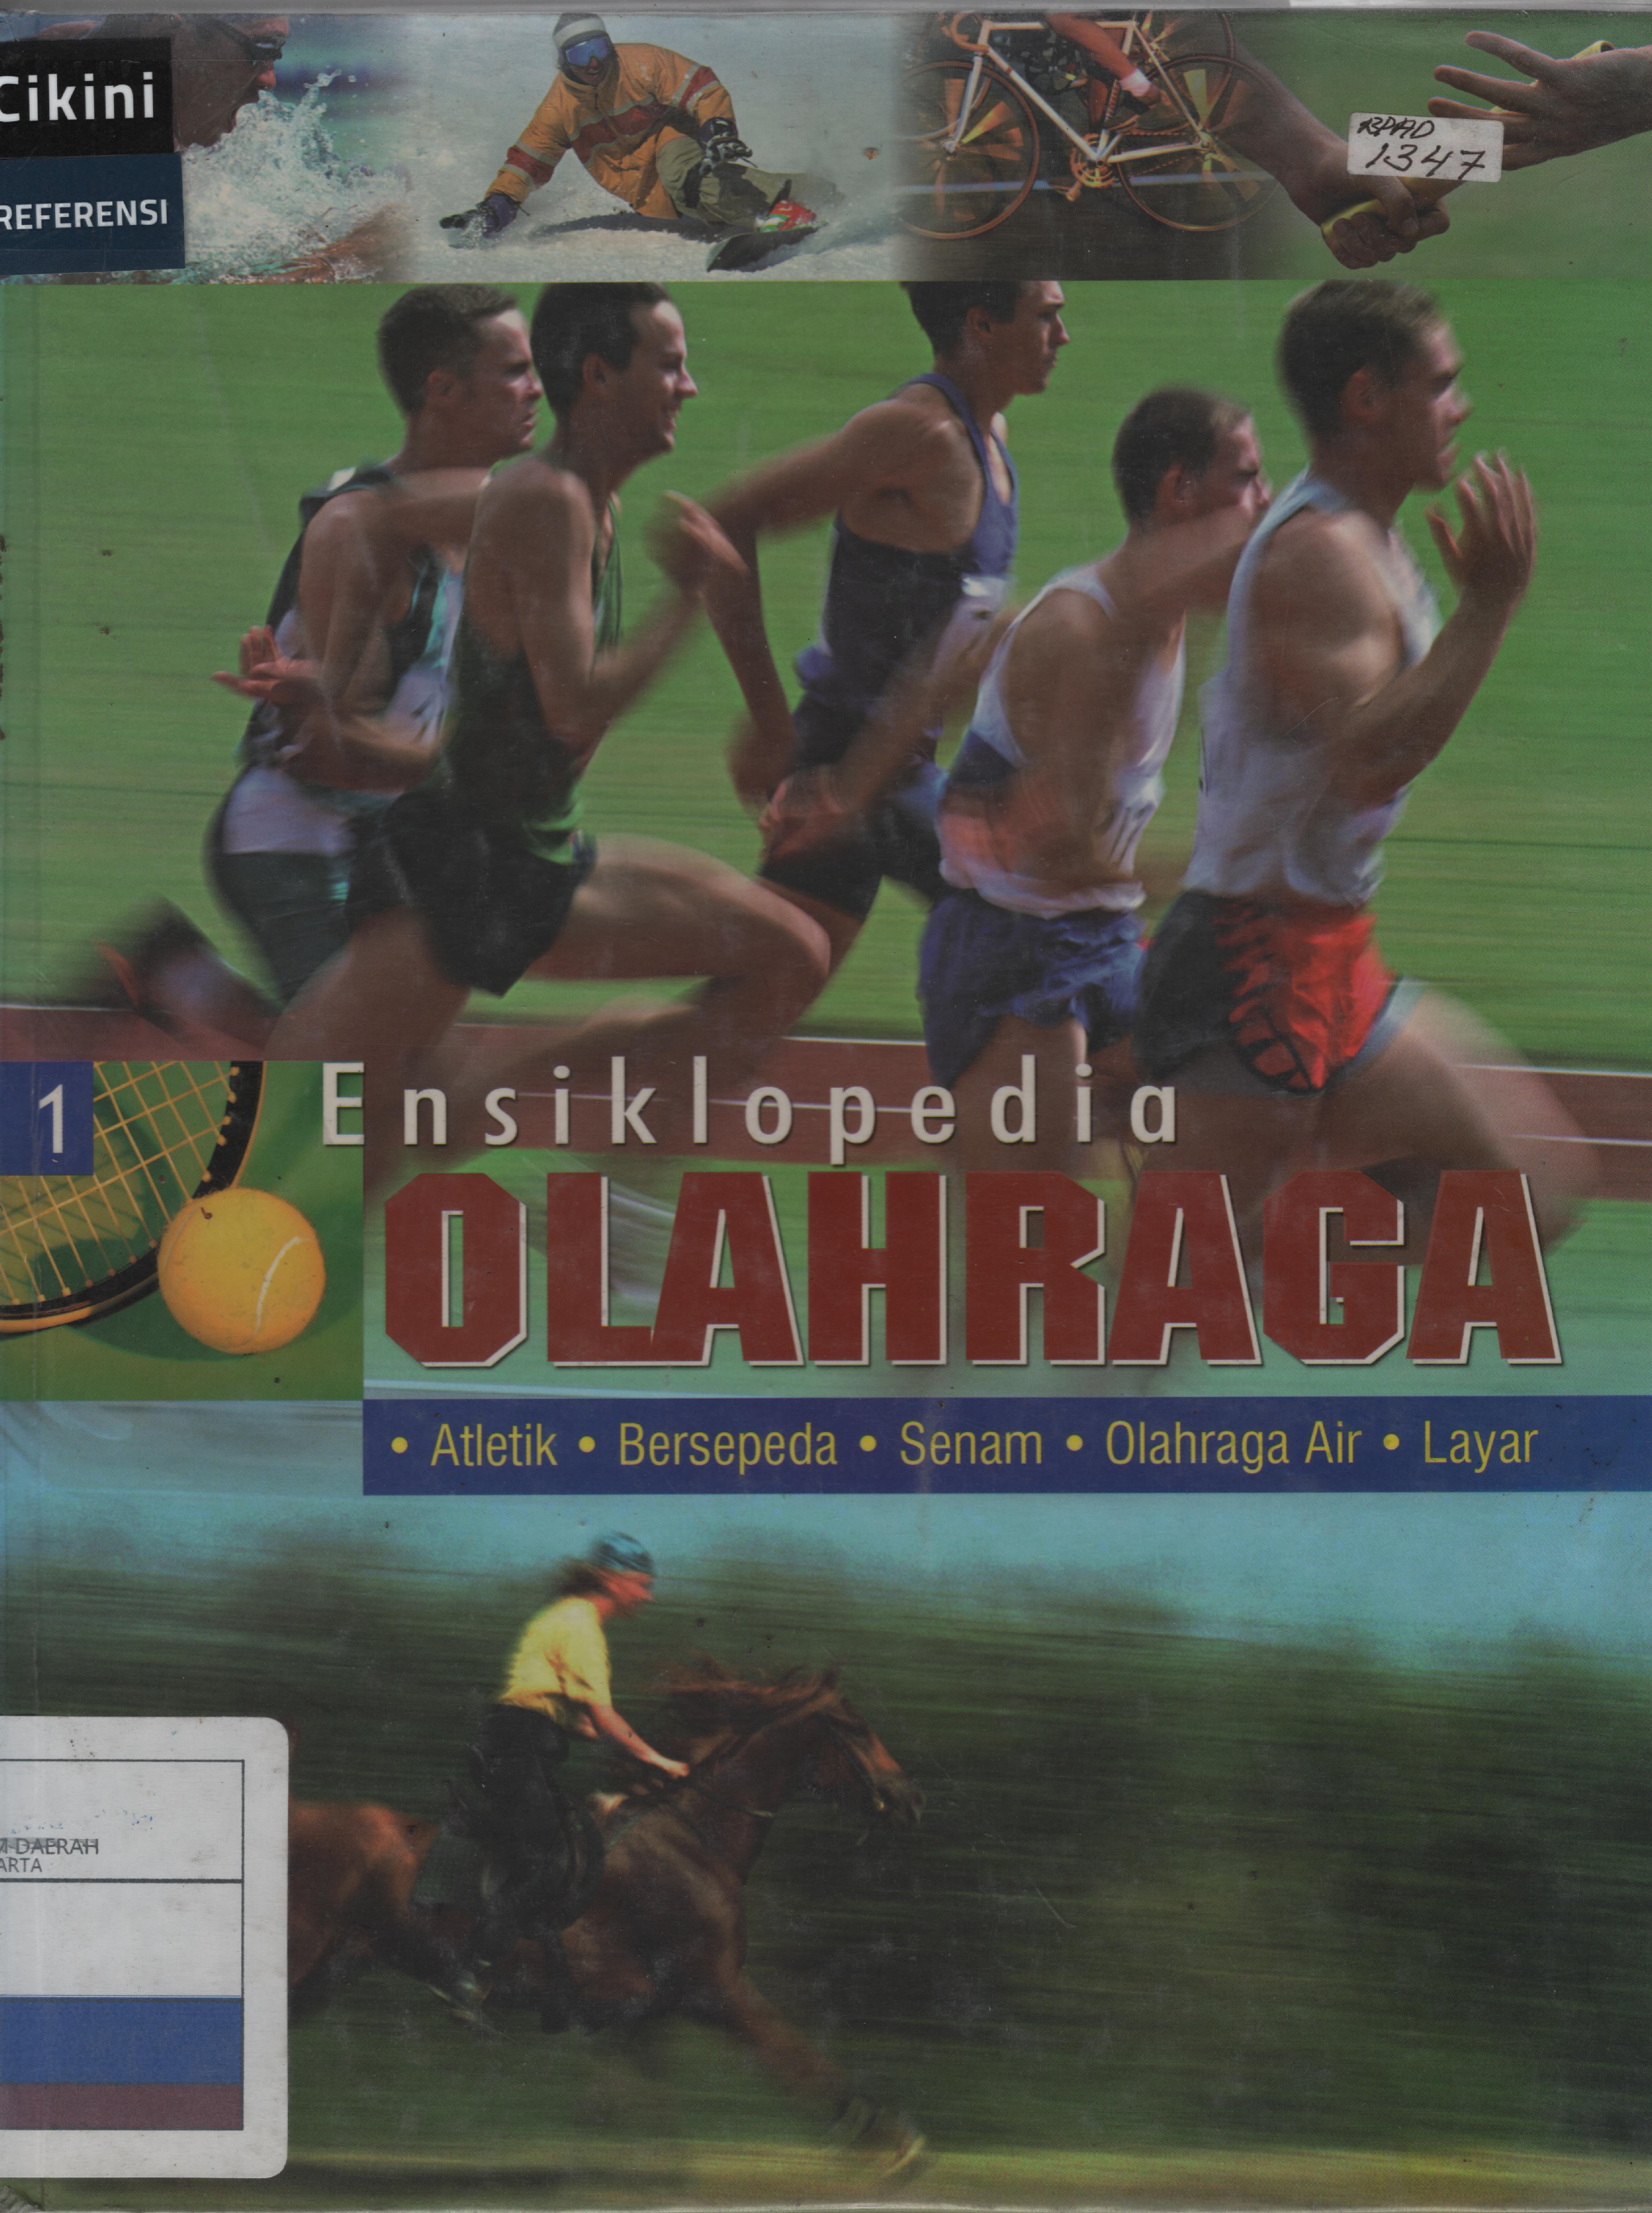 Ensiklopedia olahraga :  atletik, bersepeda, senam, olahraga air, layar